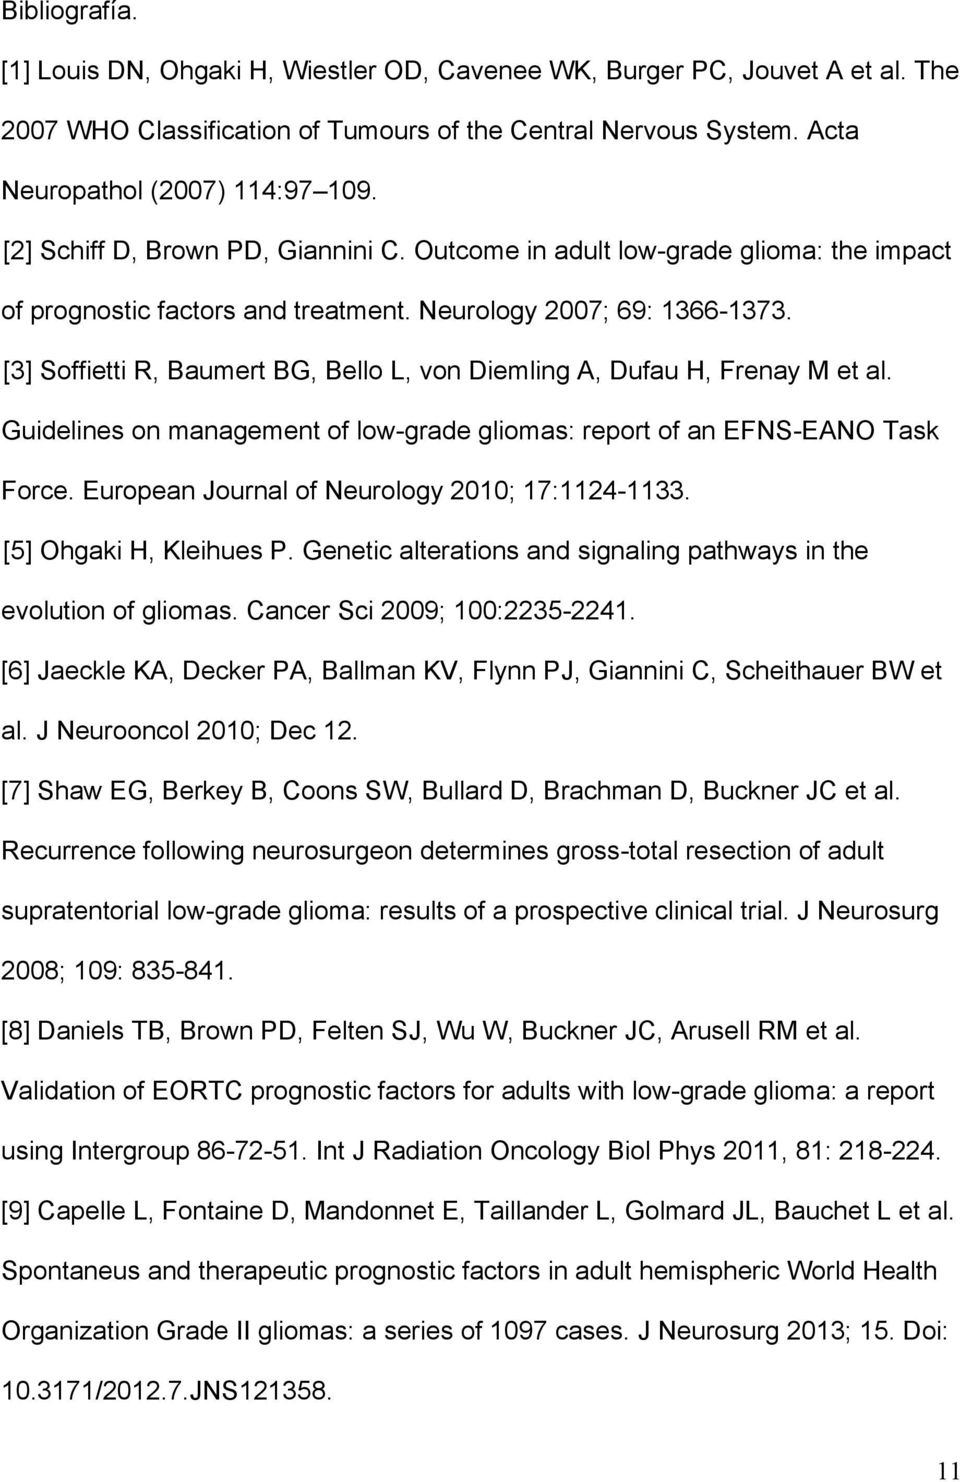 [3] Soffietti R, Baumert BG, Bello L, von Diemling A, Dufau H, Frenay M et al. Guidelines on management of low-grade gliomas: report of an EFNS-EANO Task Force.